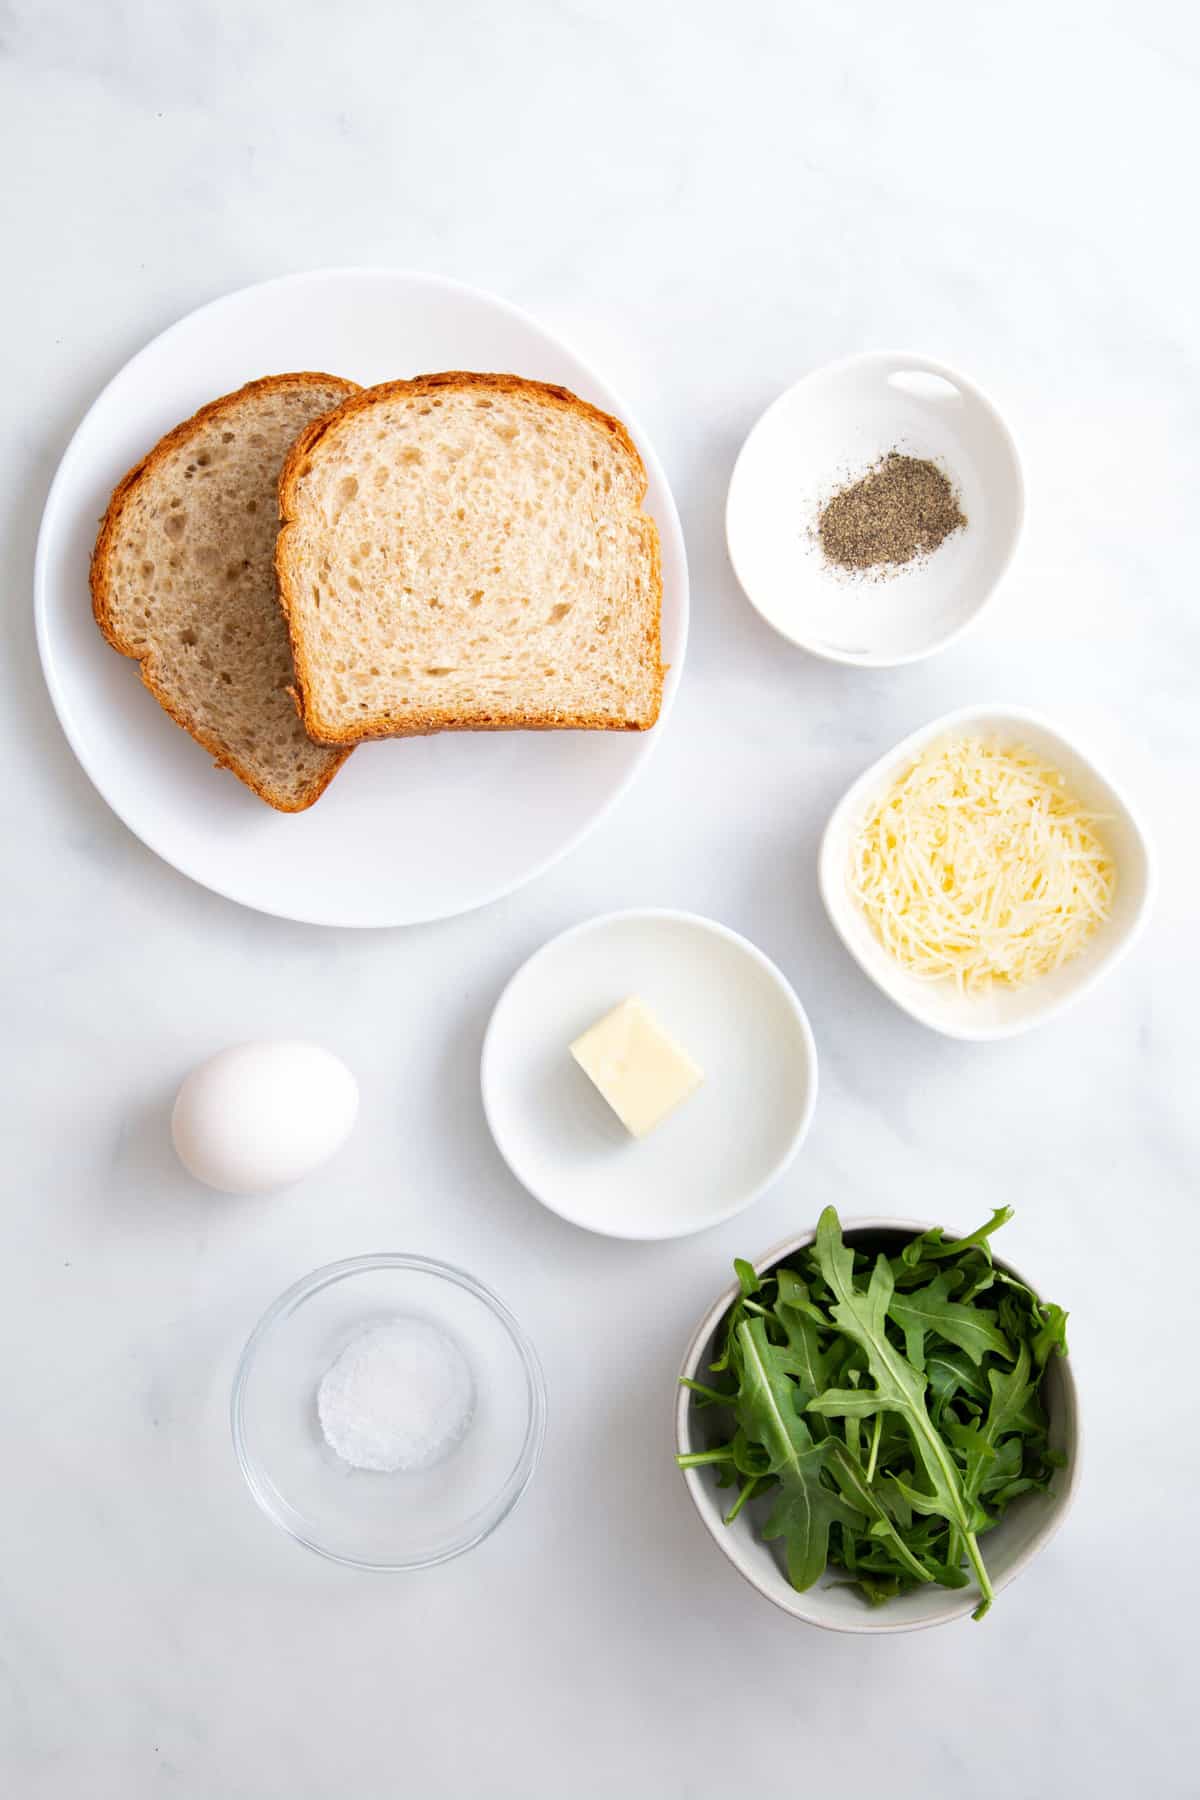 ingredients to make an scrambled egg sandwich